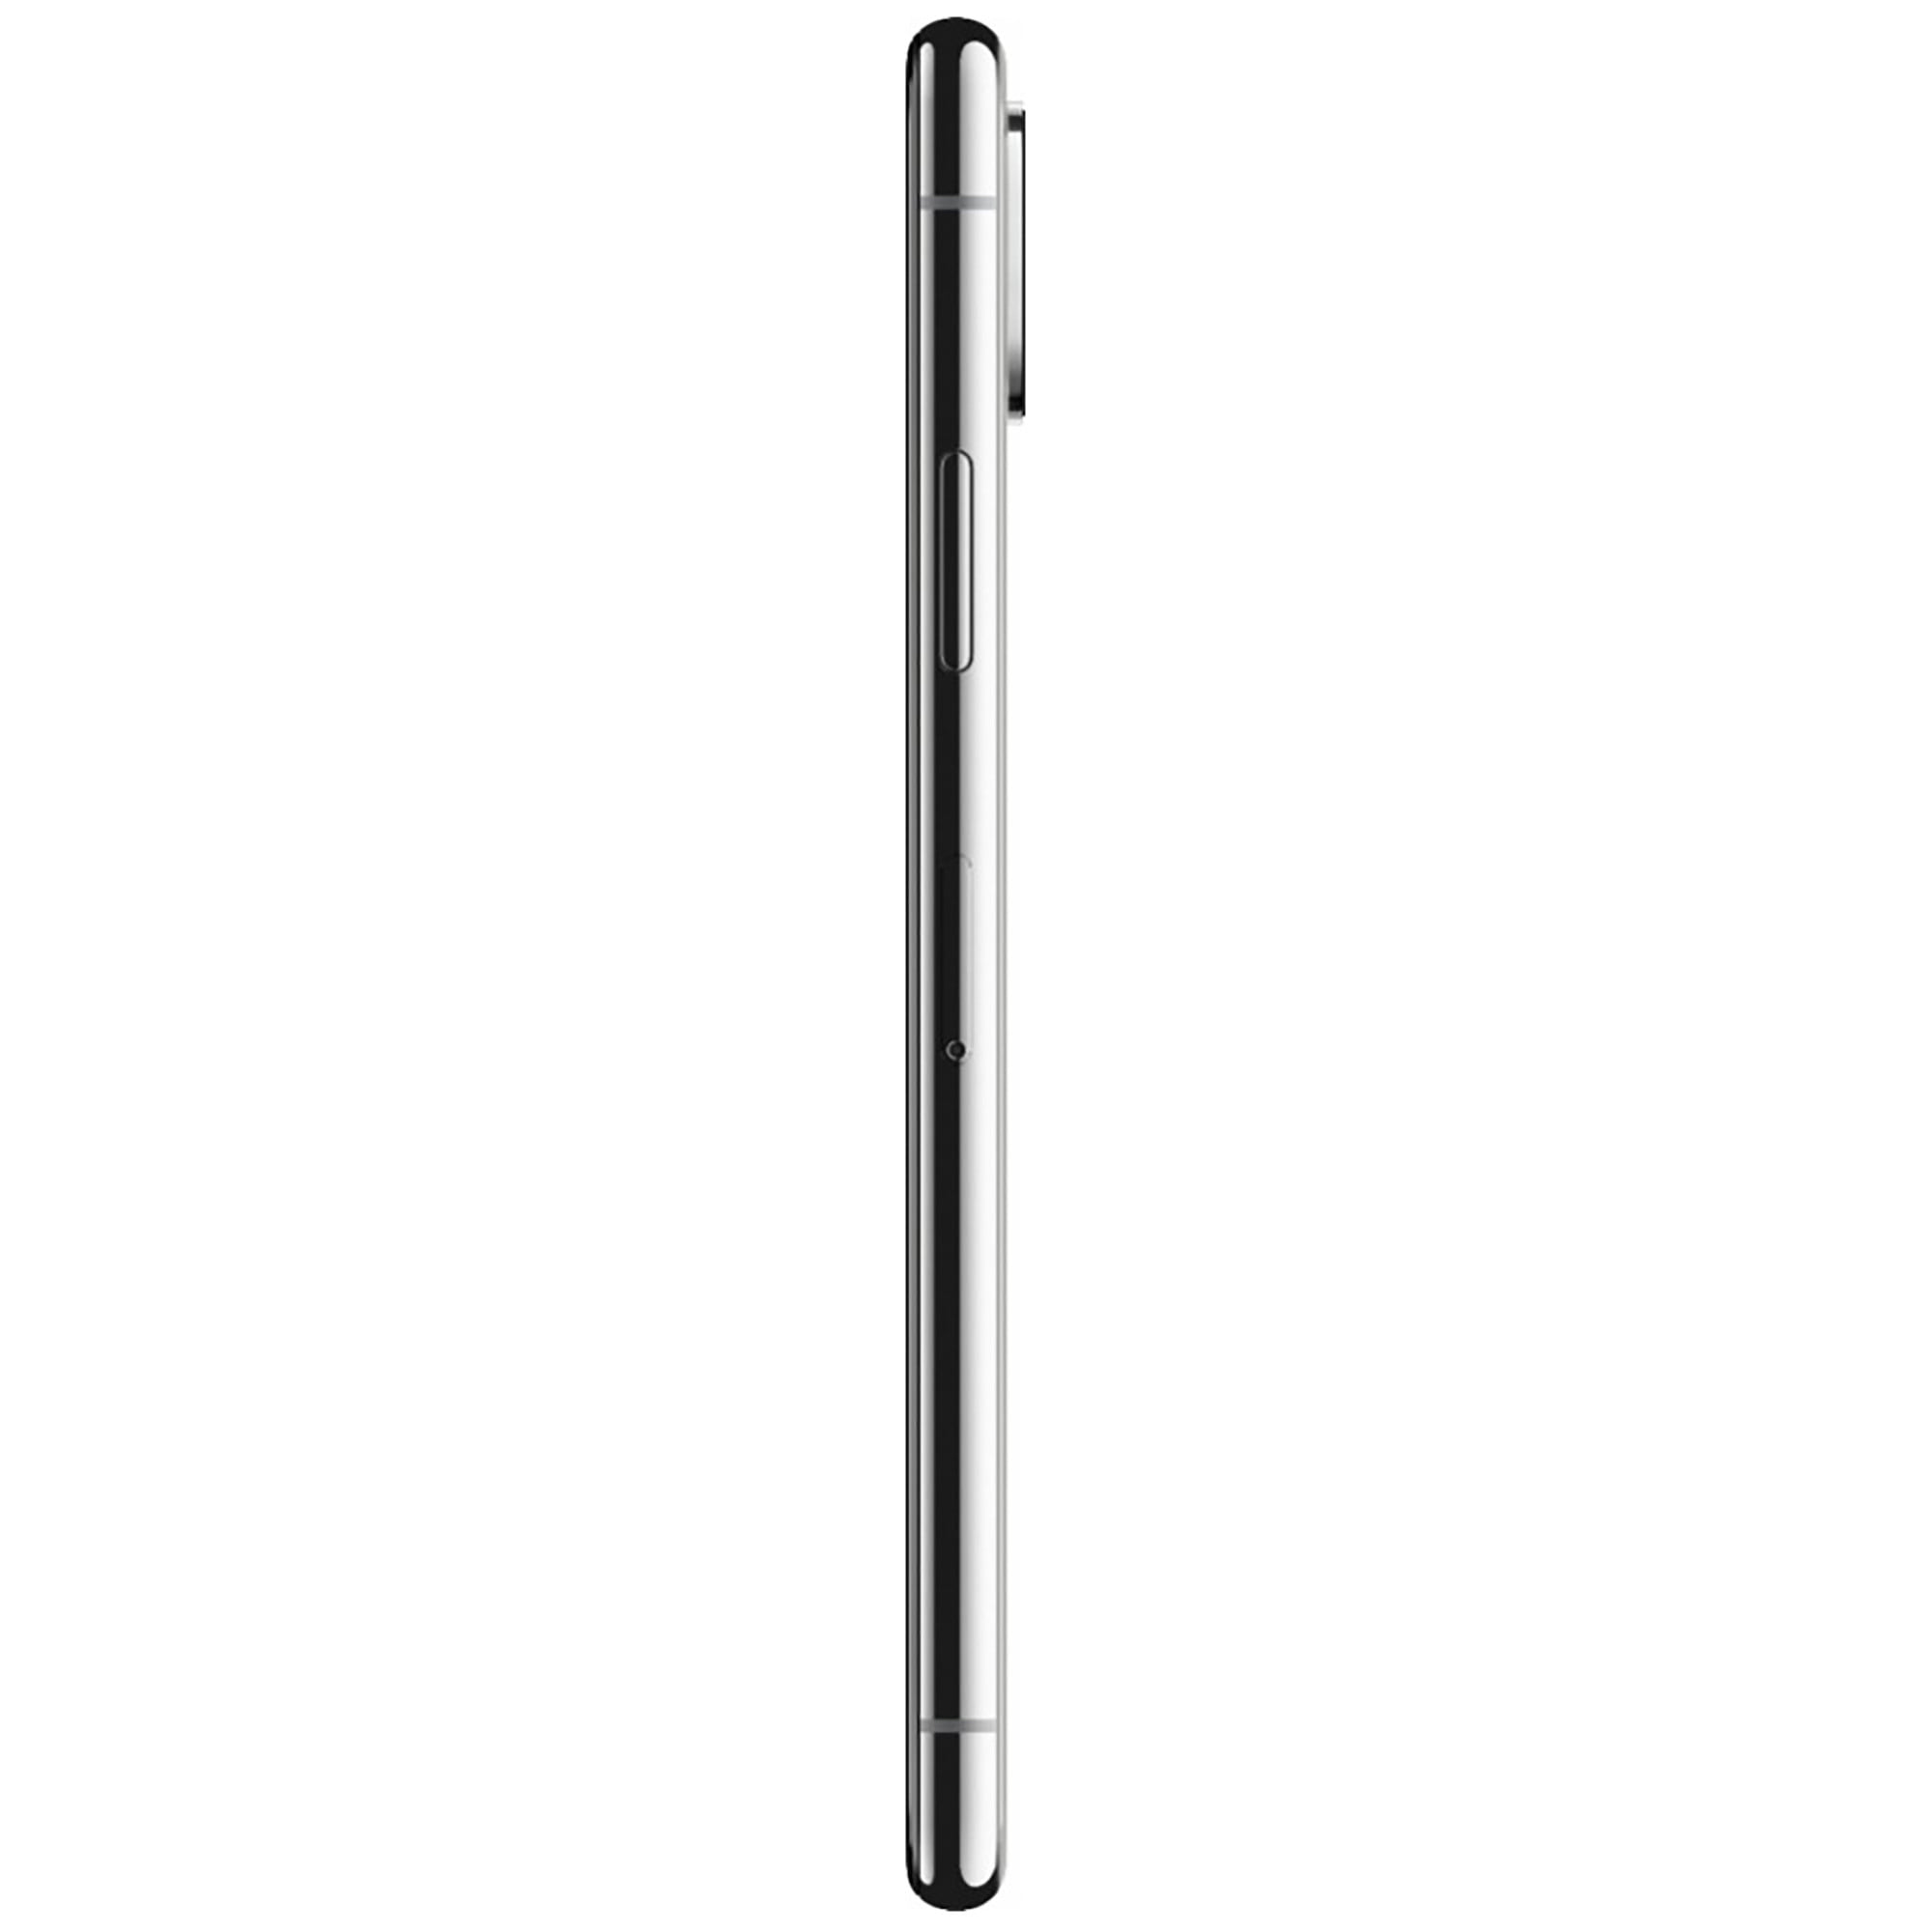 Apple iPhone XS 256GB Fully Unlocked - Silver (Used) + Liquid Nano 